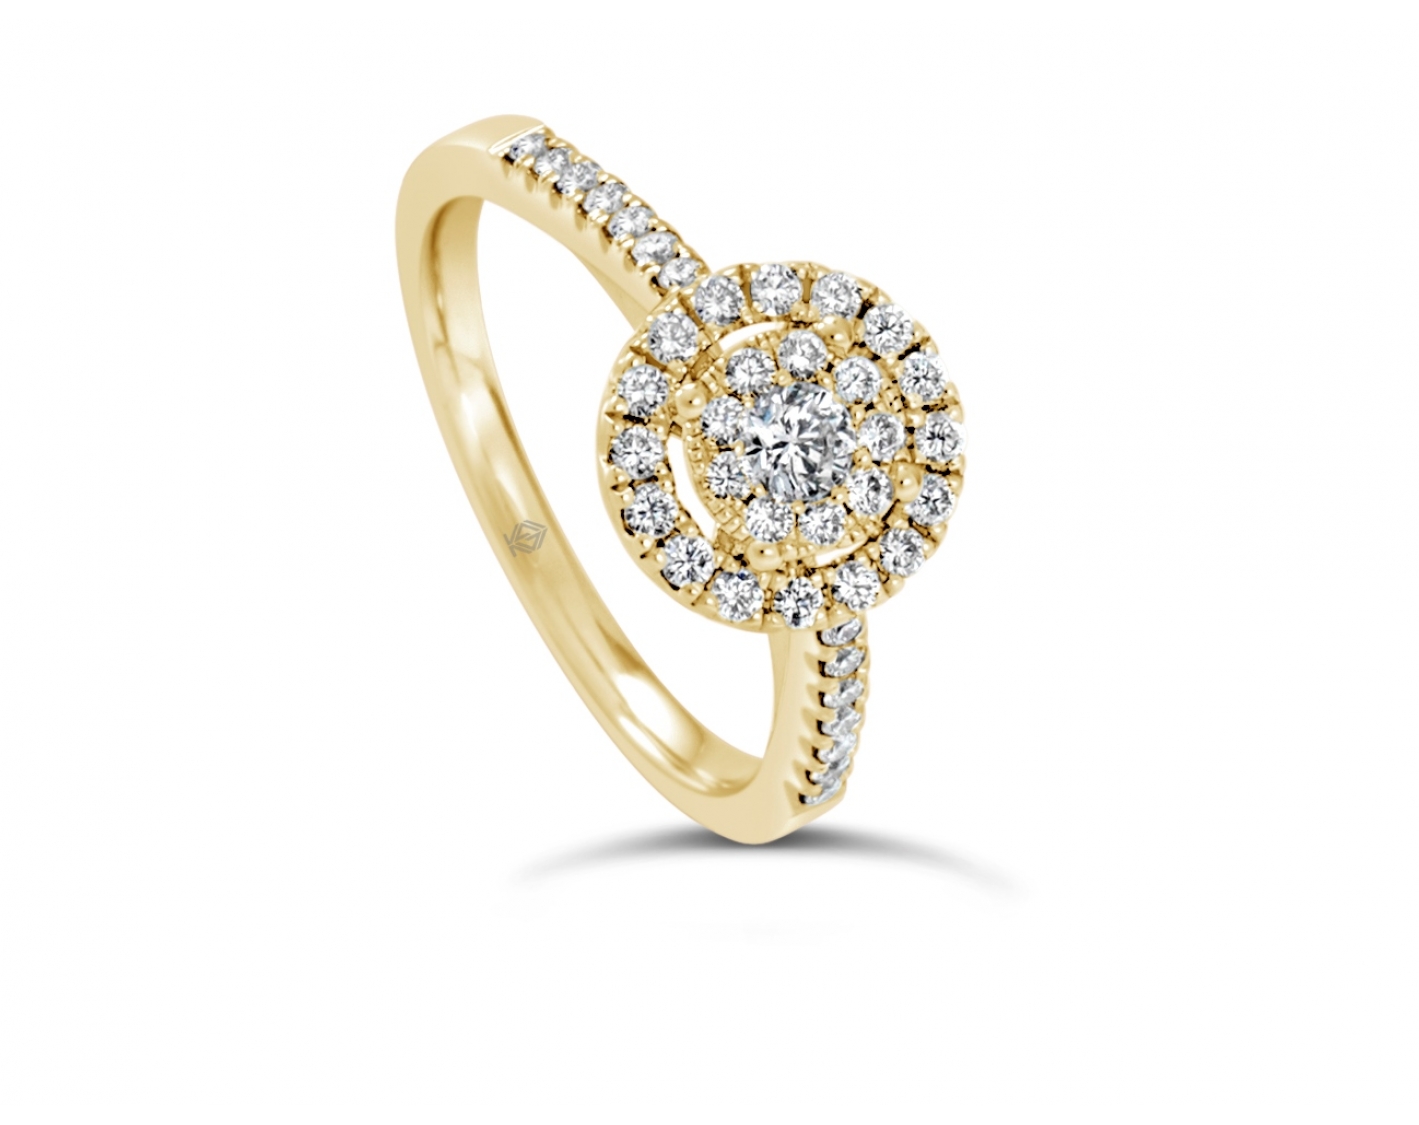 18k white gold halo illusion set engagement ring with pave set sidestones Photos & images